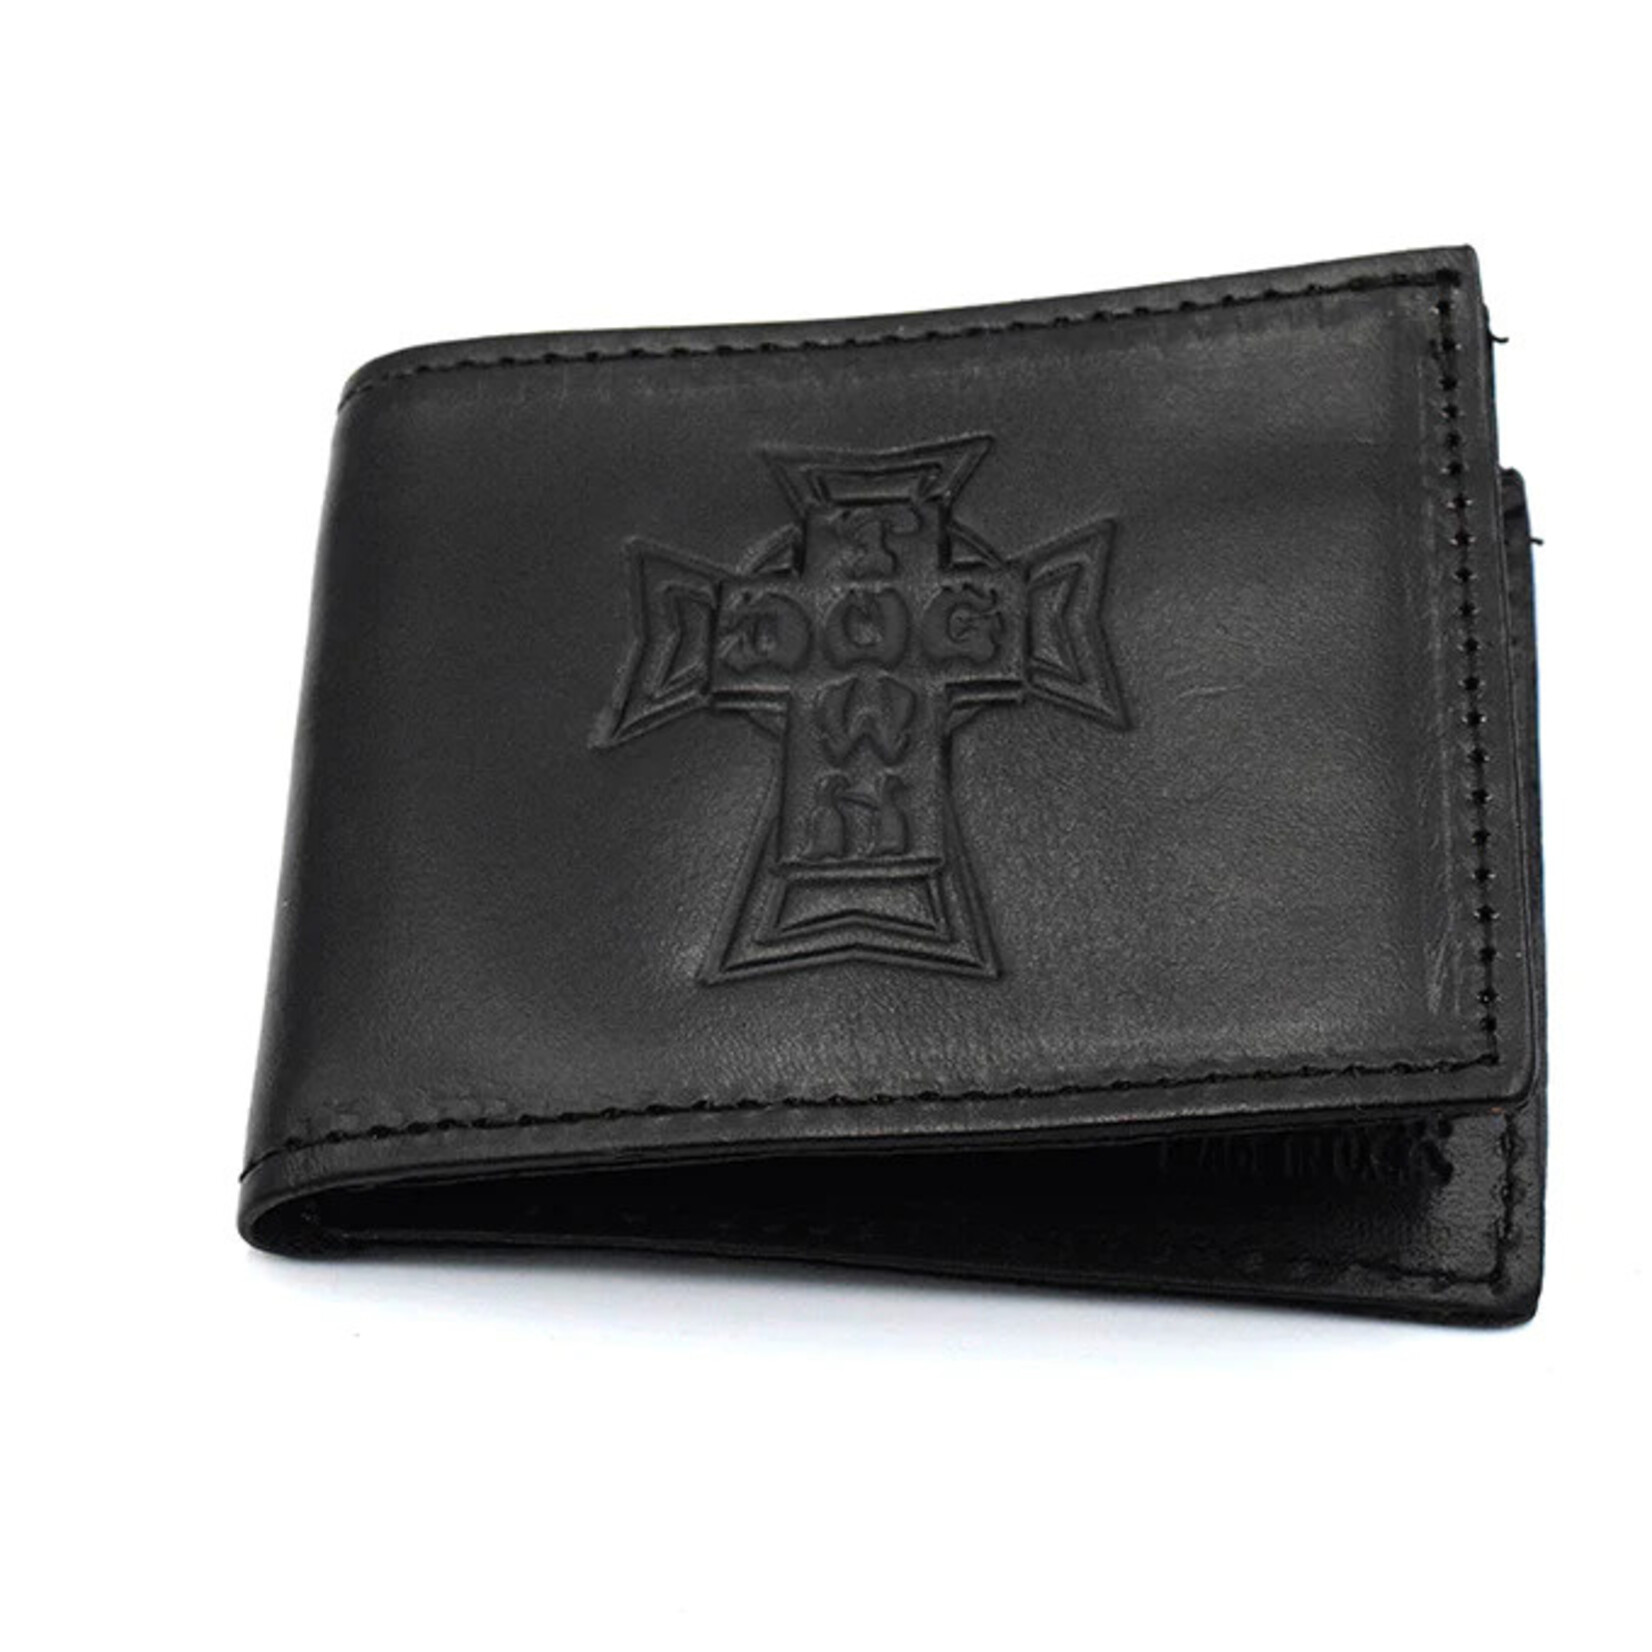 Dogtown Dogtown Vintage Cross Leather Billfold Wallet - Black